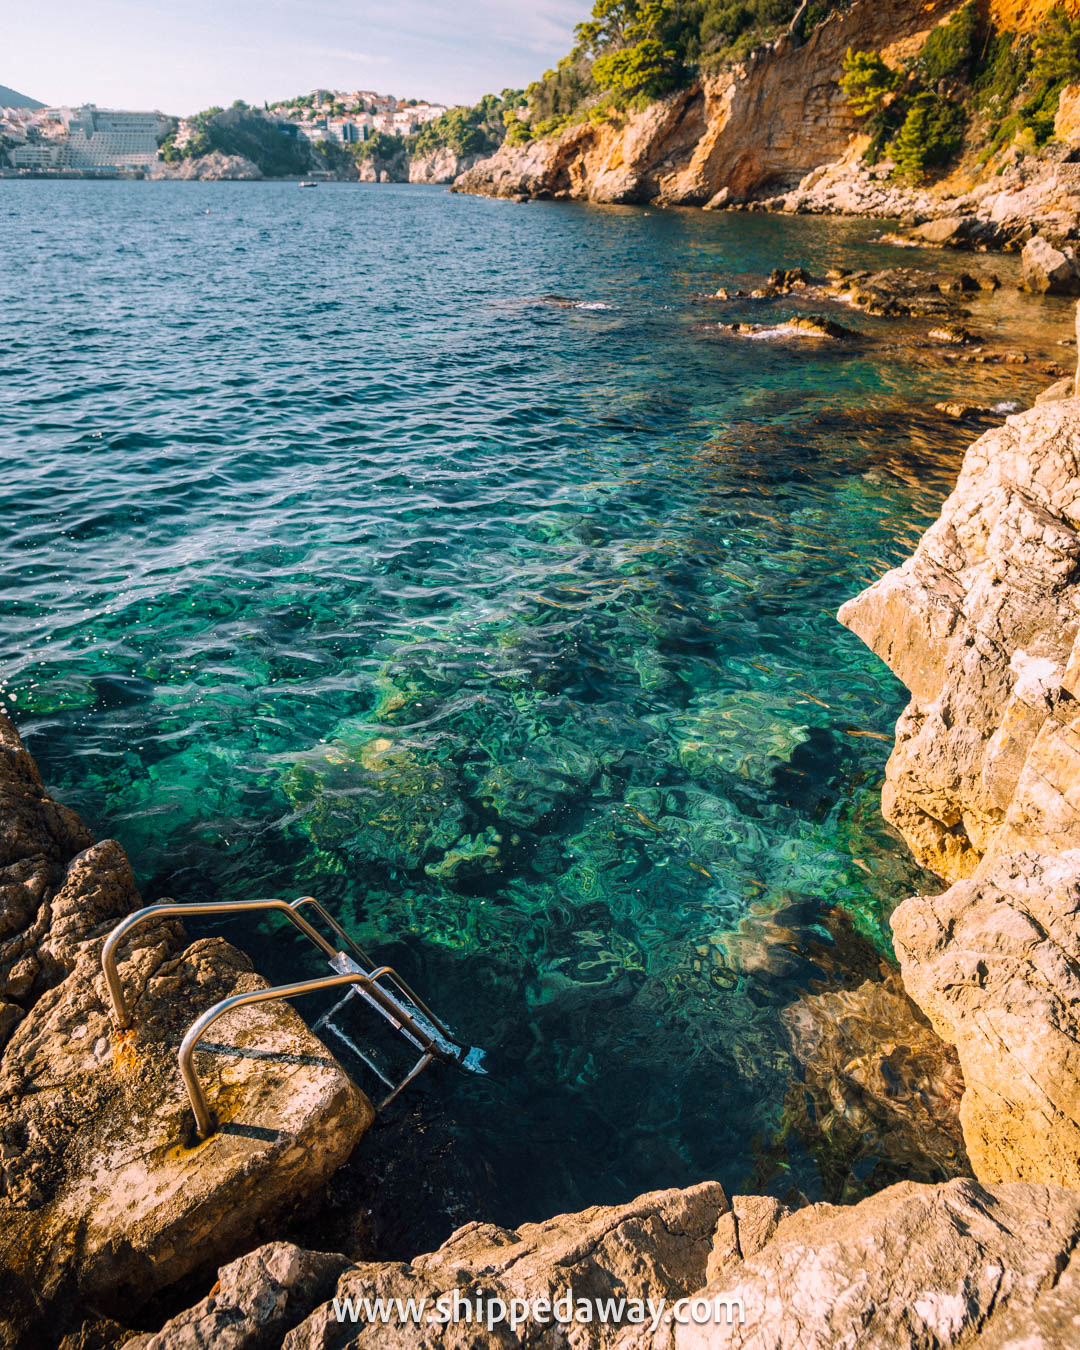 Best Dubrovnik Beaches - Dubrovnik Beaches - Best Beaches in Dubrovnik - Dubrovnik Beaches Guide - Best Beaches in Dubrovnik as recommended by a local - Dance Beach